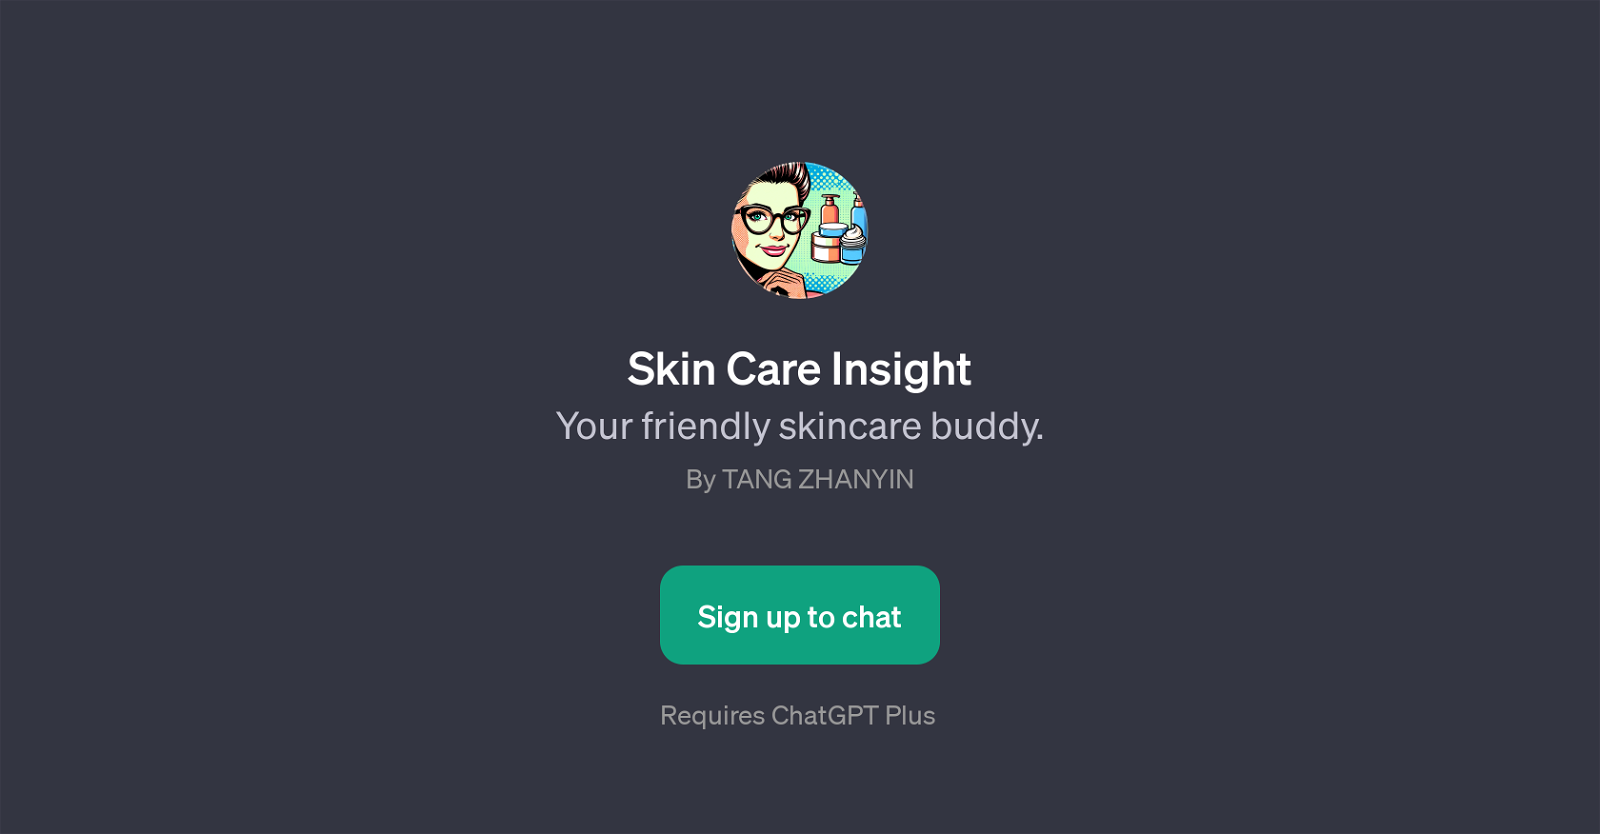 Skin Care Insight website